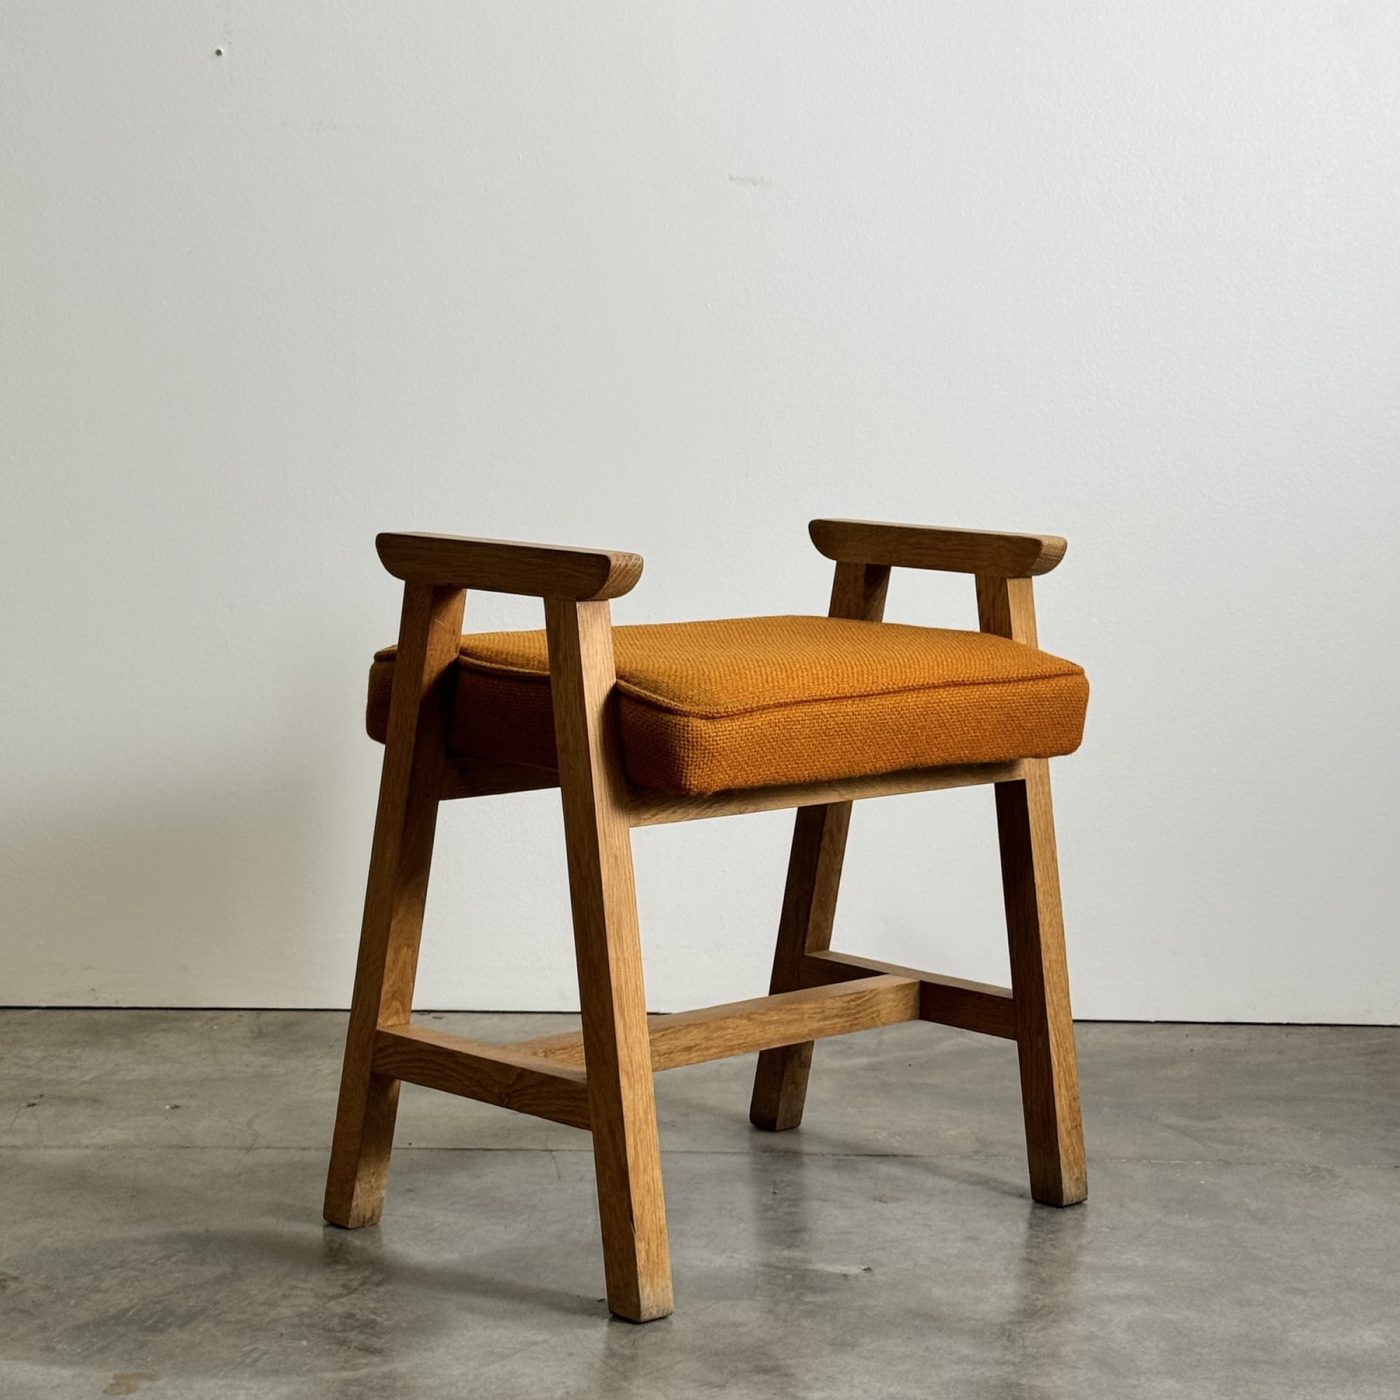 objet-vagabond-guillerme-stool0002